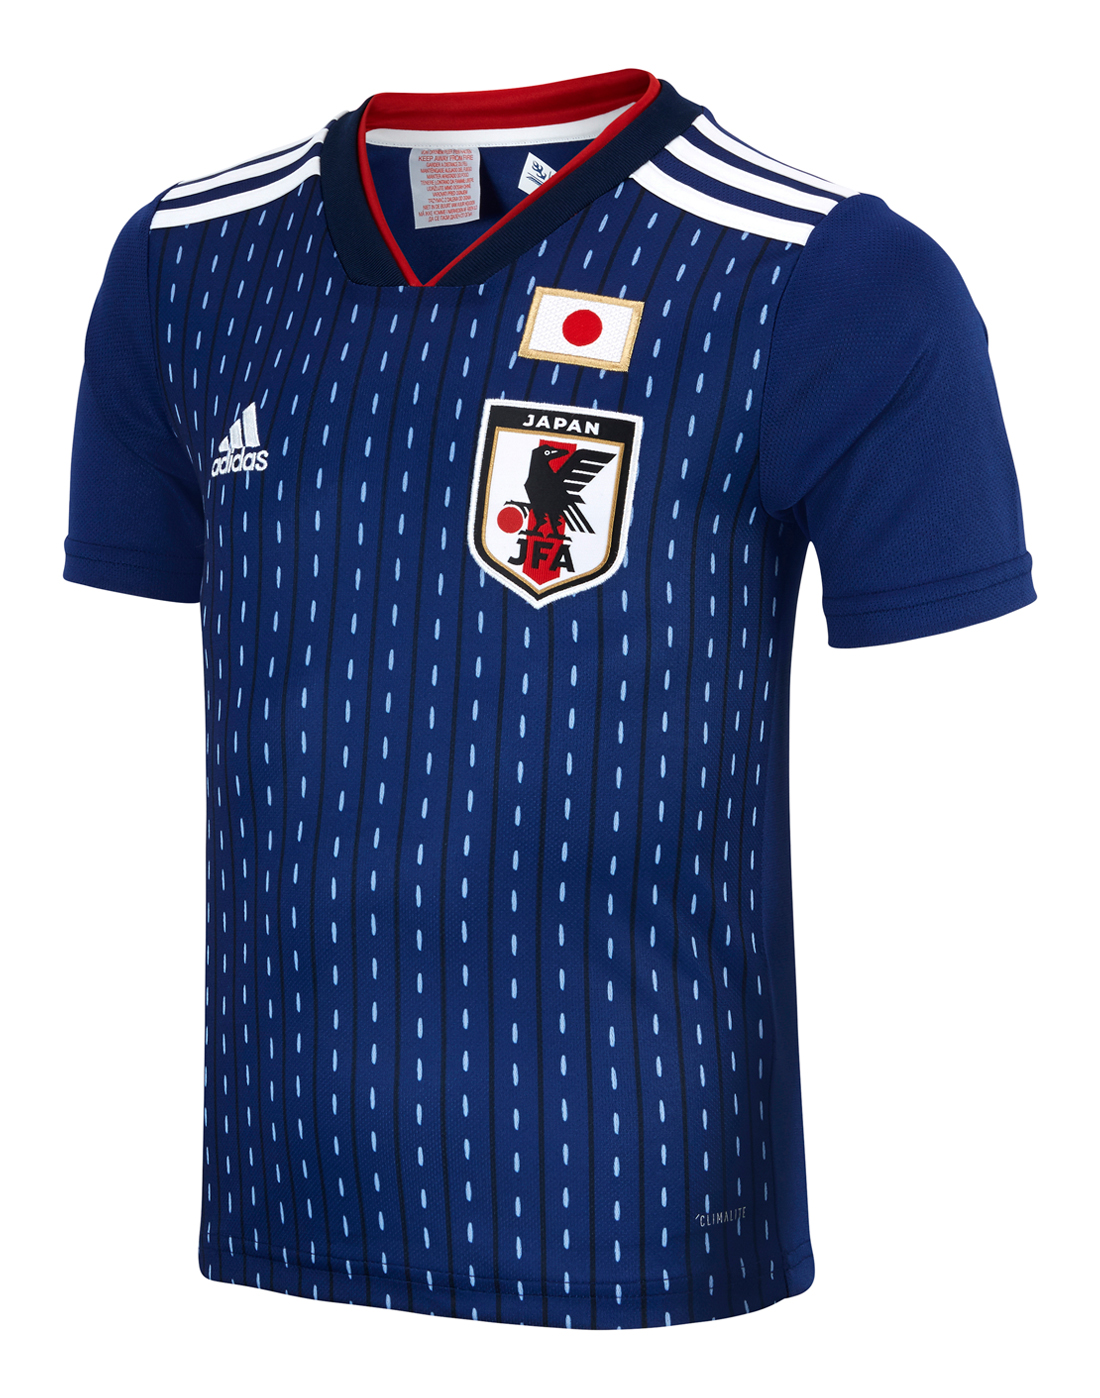 Boys England Shirt Top & Shorts World Cup Soccer Football Kit Kids Clothes 3-14y